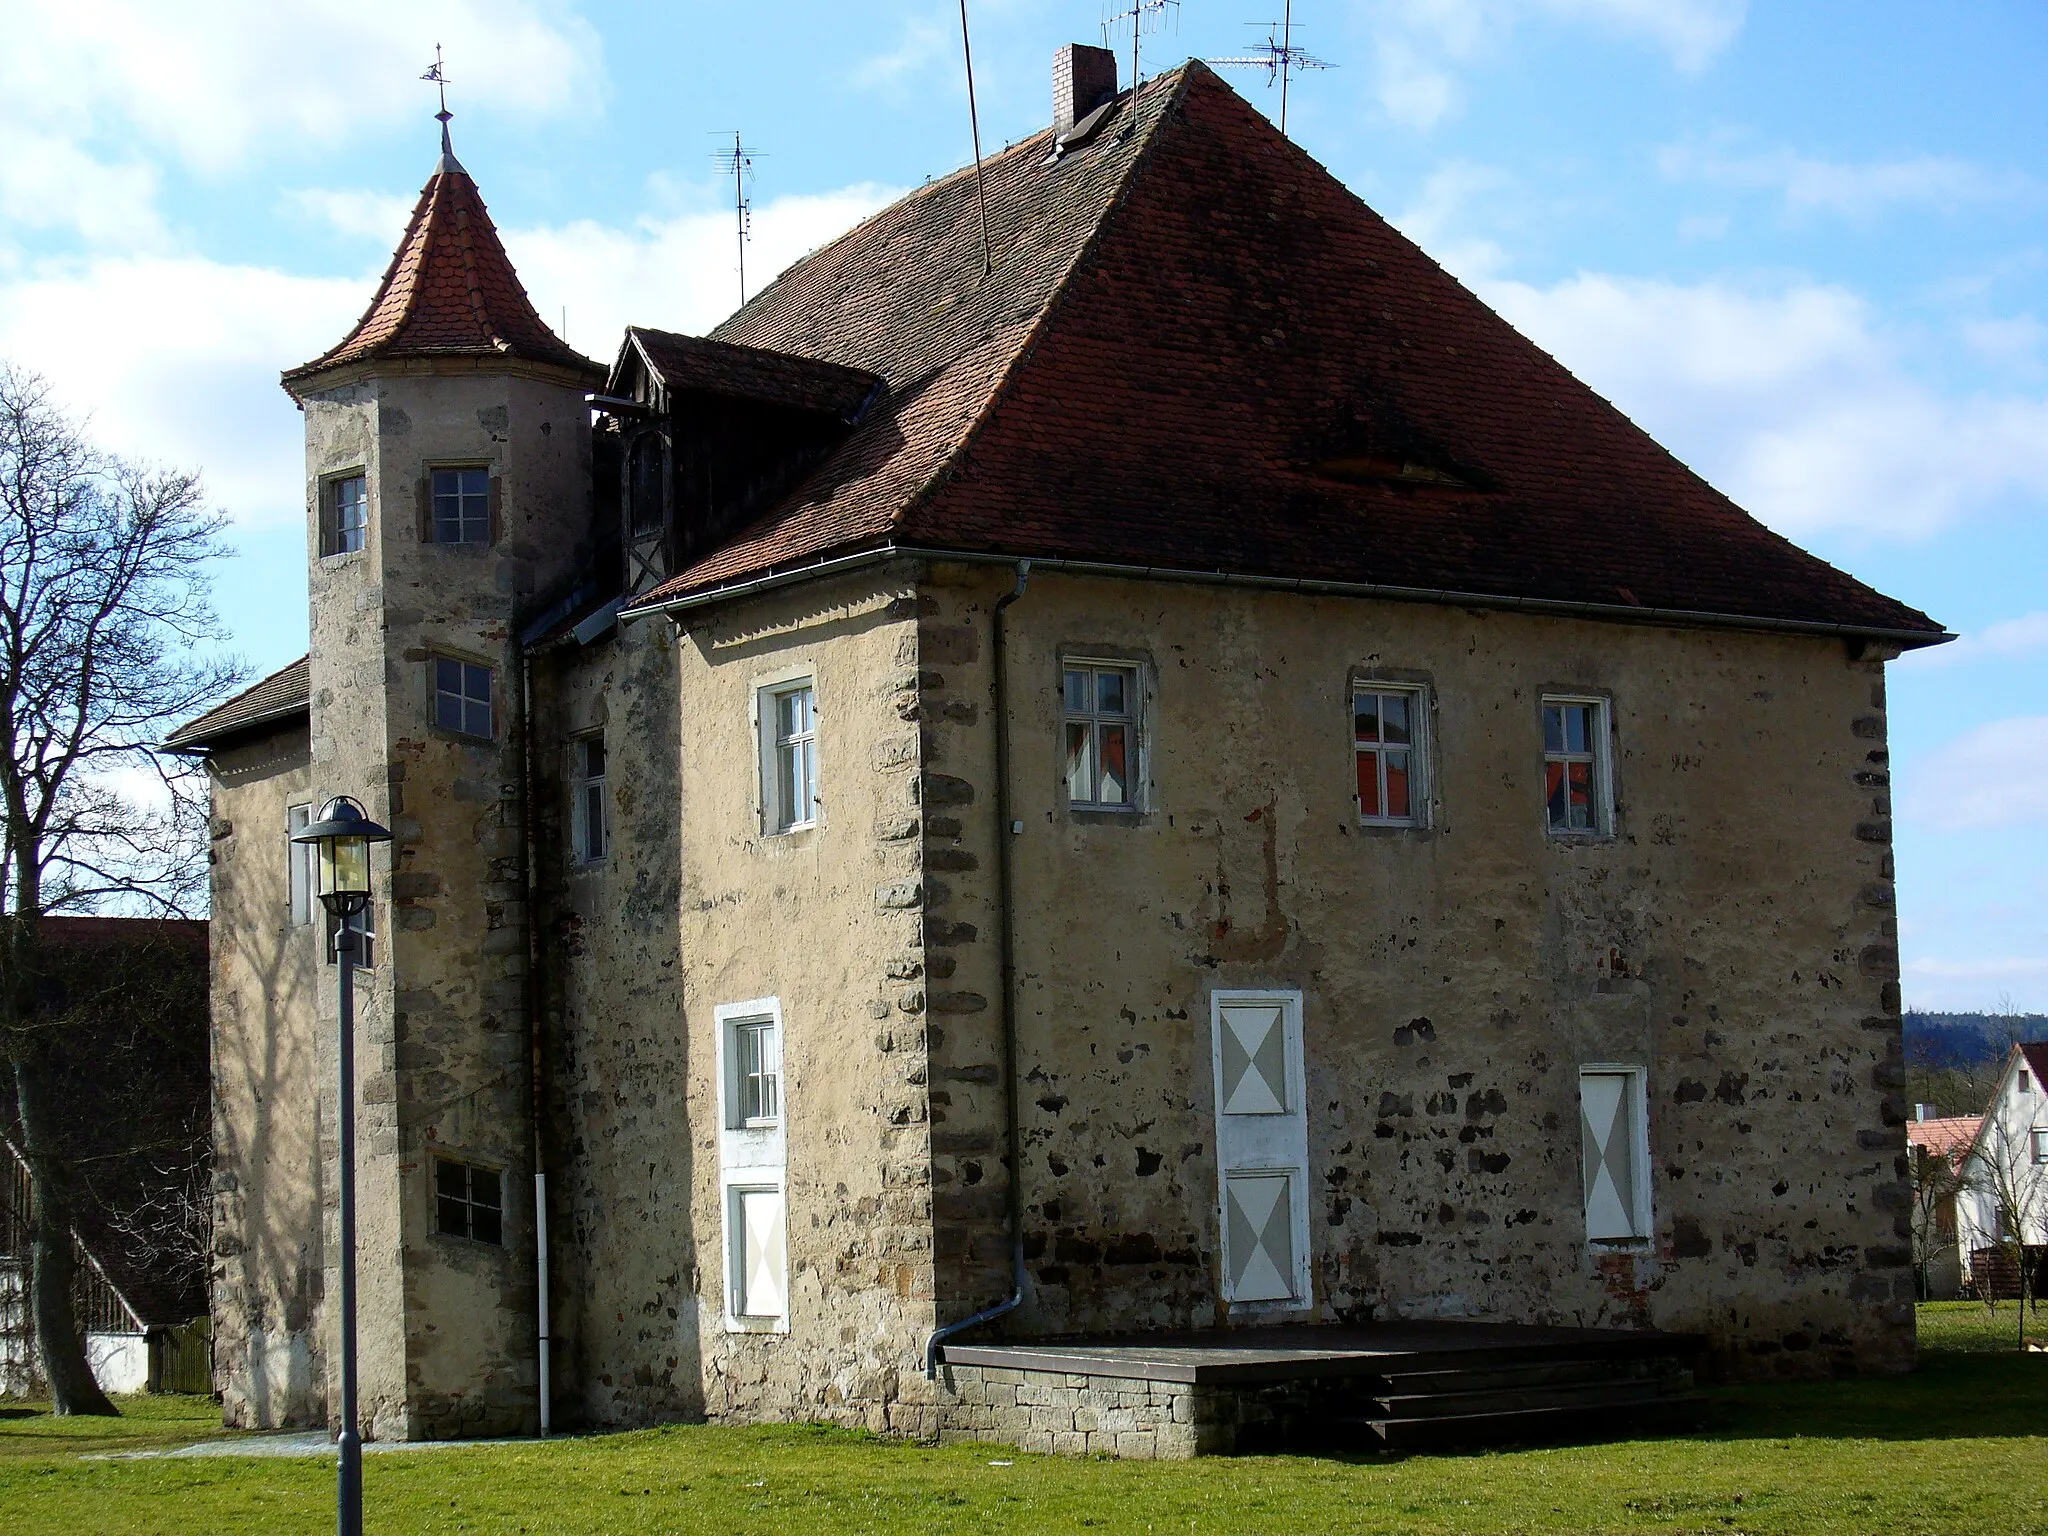 Photo showing: Bildinhalt: Lehrberger Schloss im Februar 2014
Aufnahmeort: Lehrberg, Deutschland